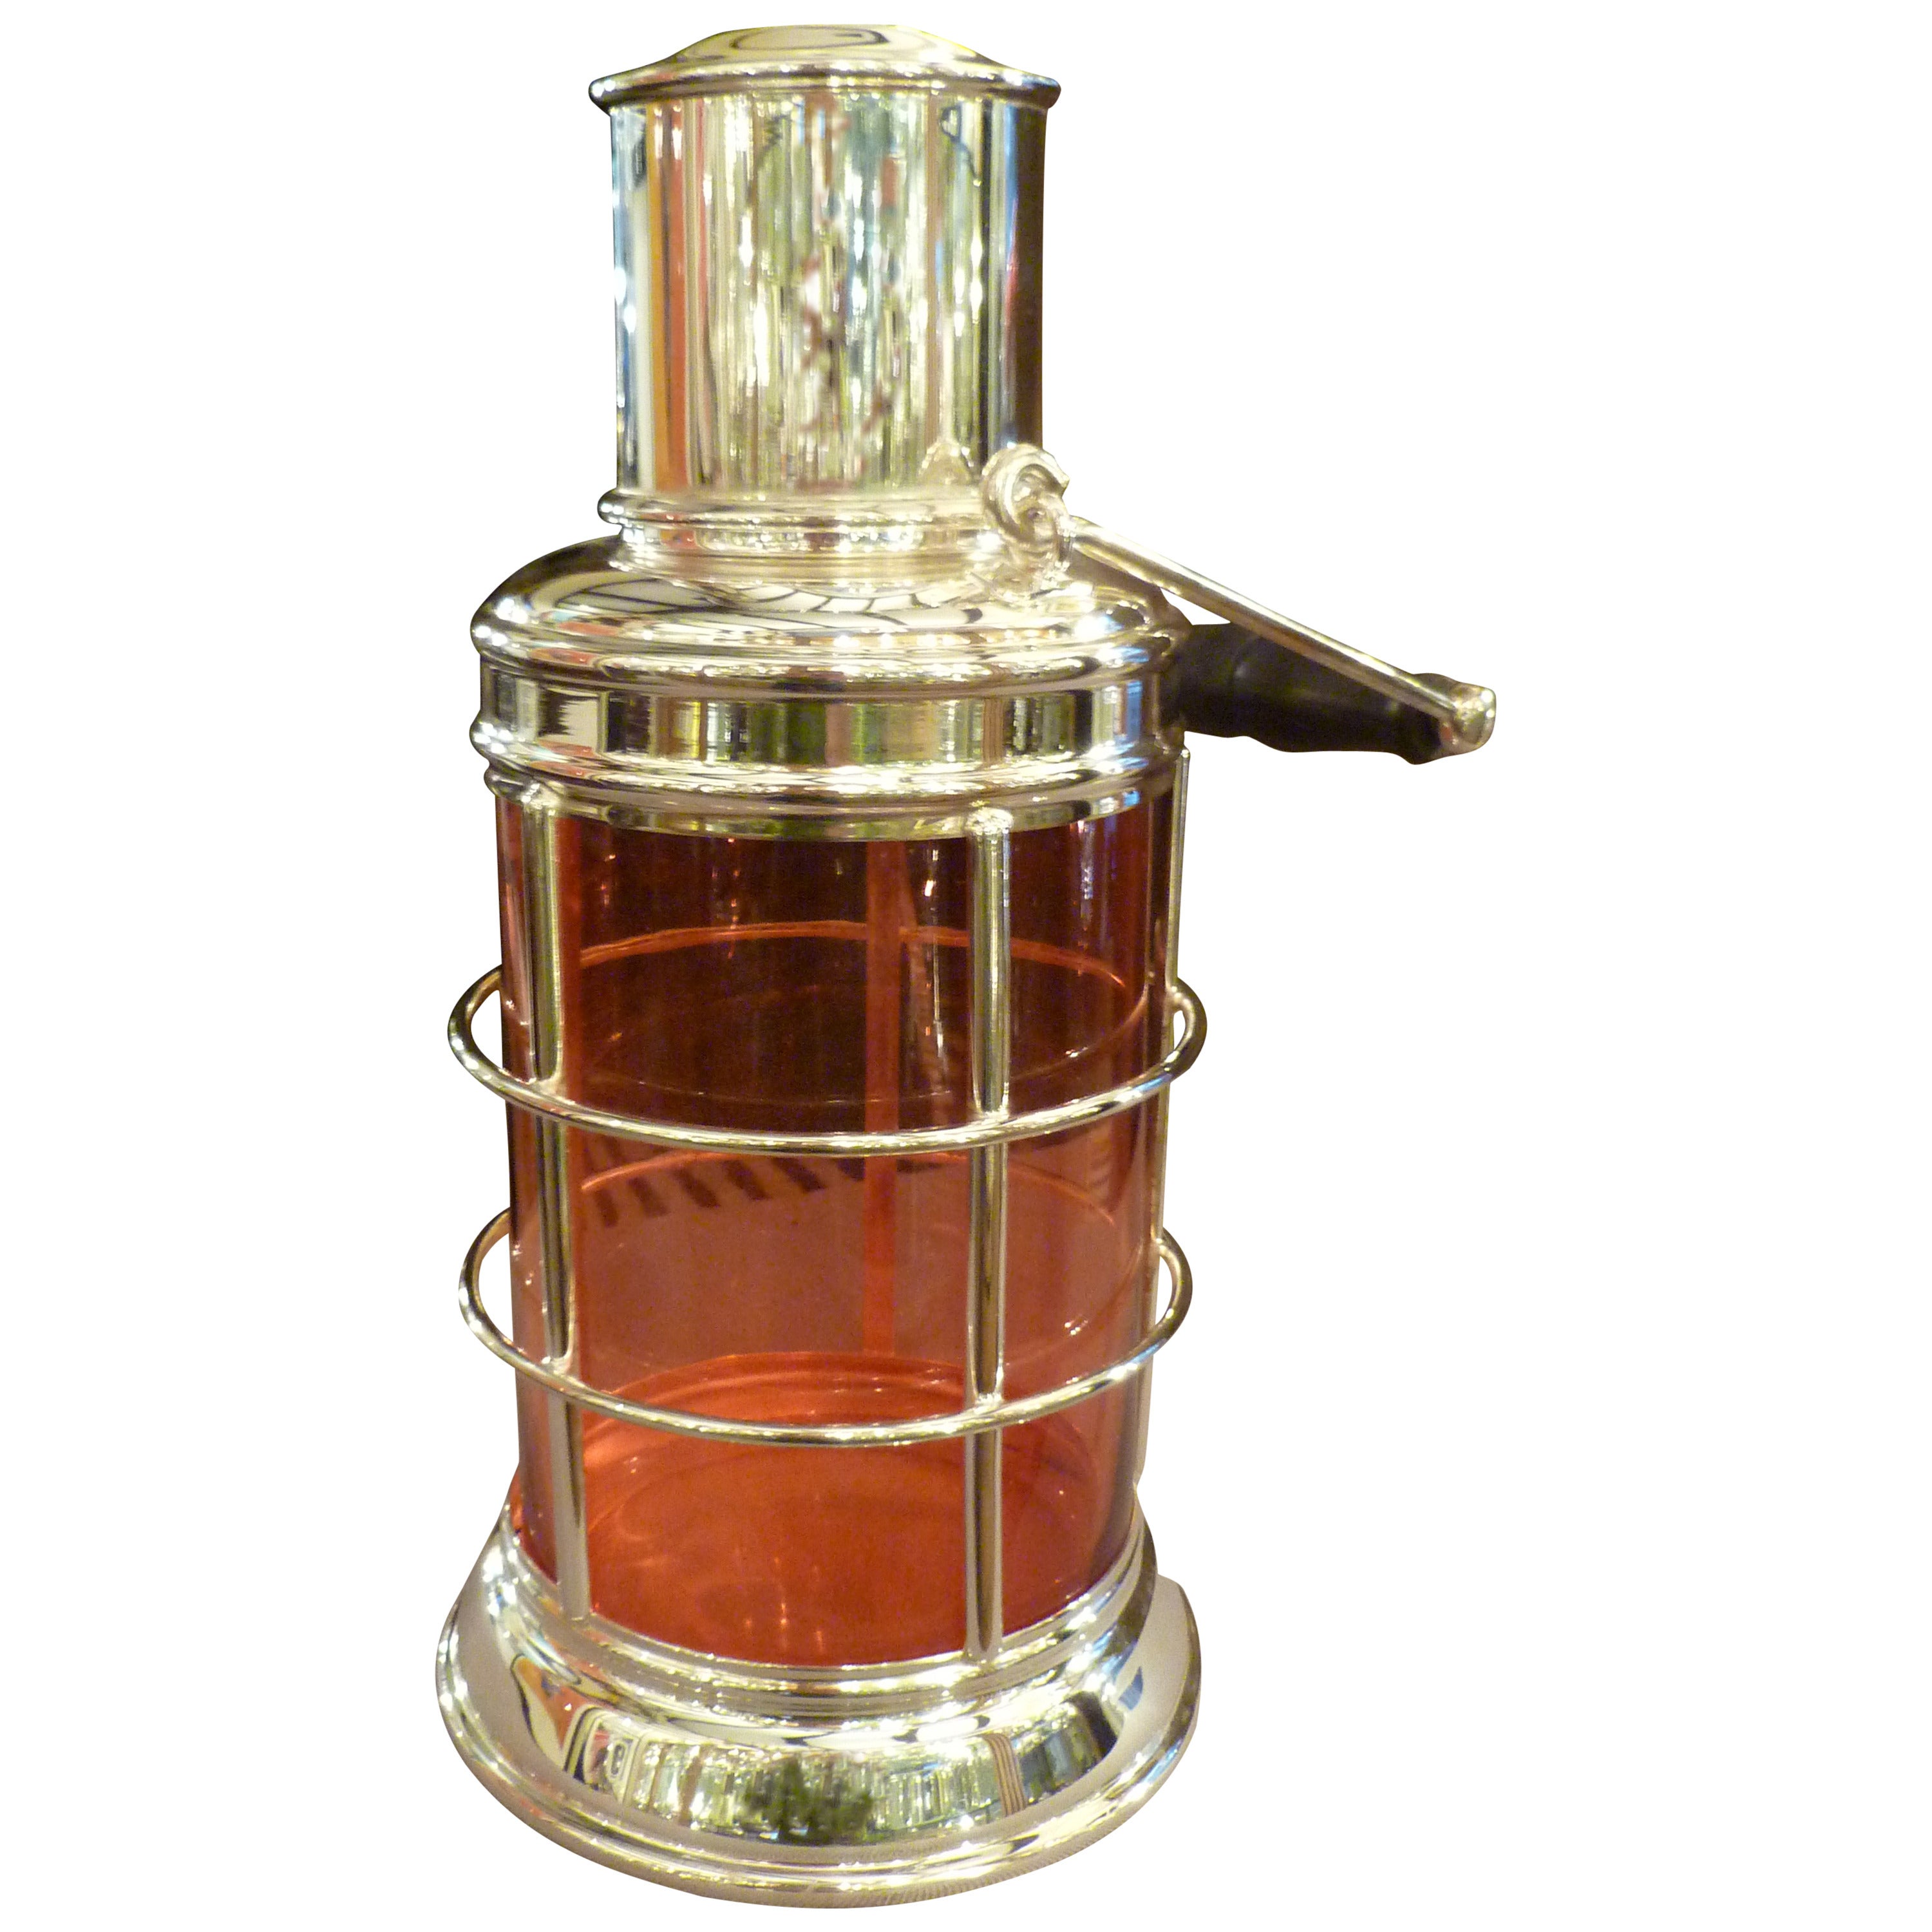 The “Ship’s Lantern” cocktail shaker by Asprey & Co.